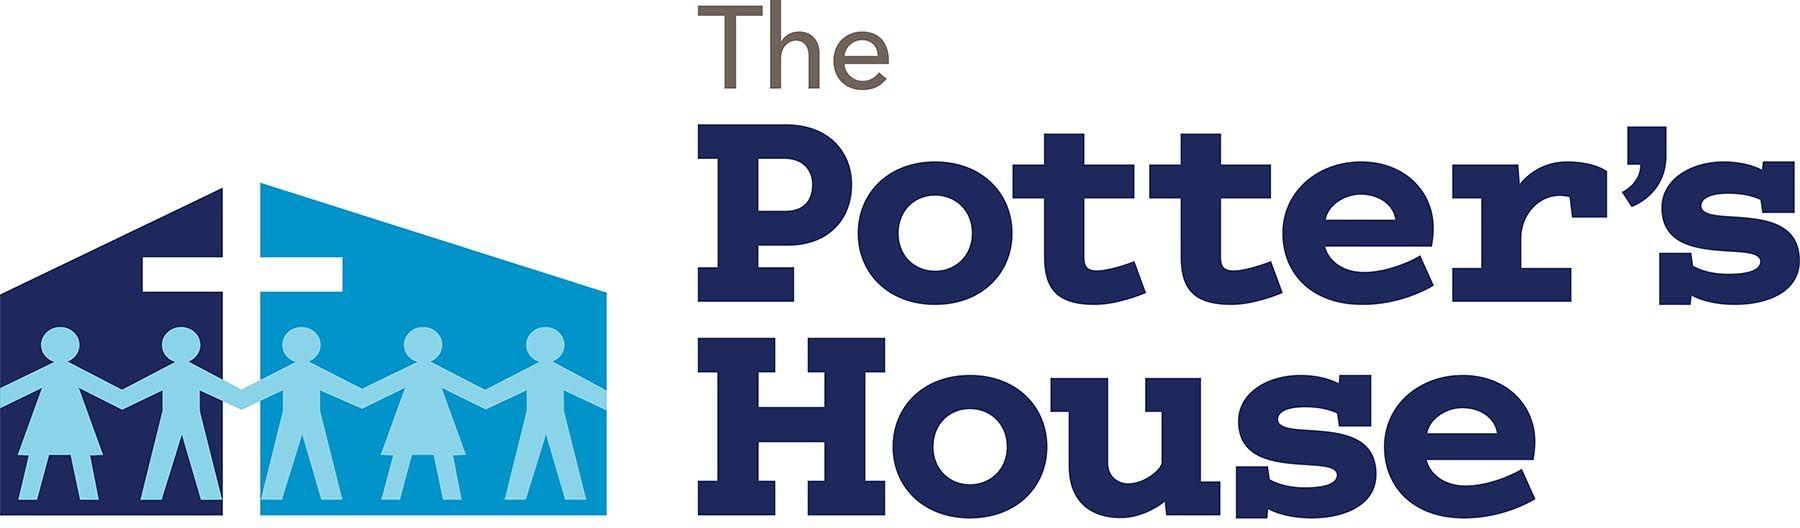 Potter's House Logo - Potter's House – GRgives on GivingTuesday